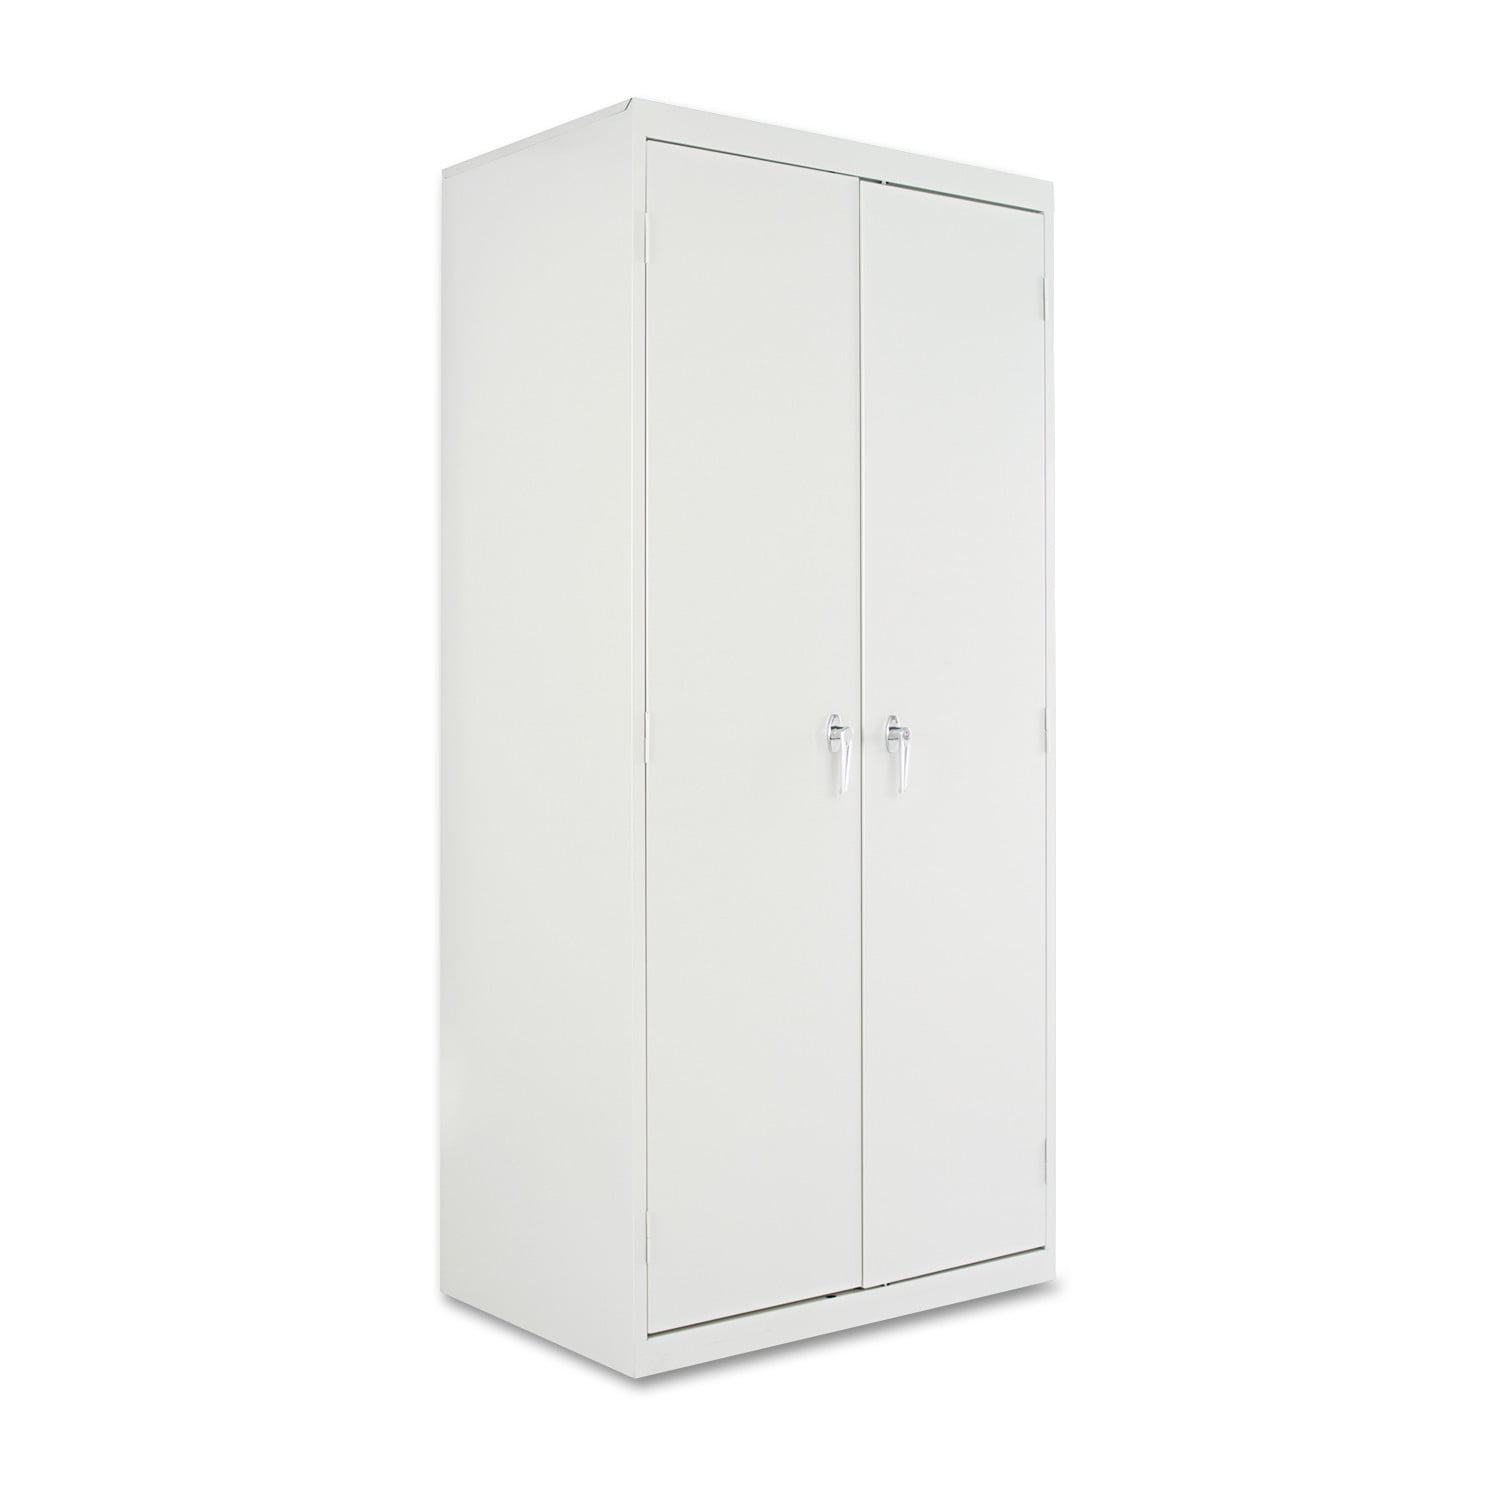 Plastic Storage Cabinet 36x22x72 - Light Gray